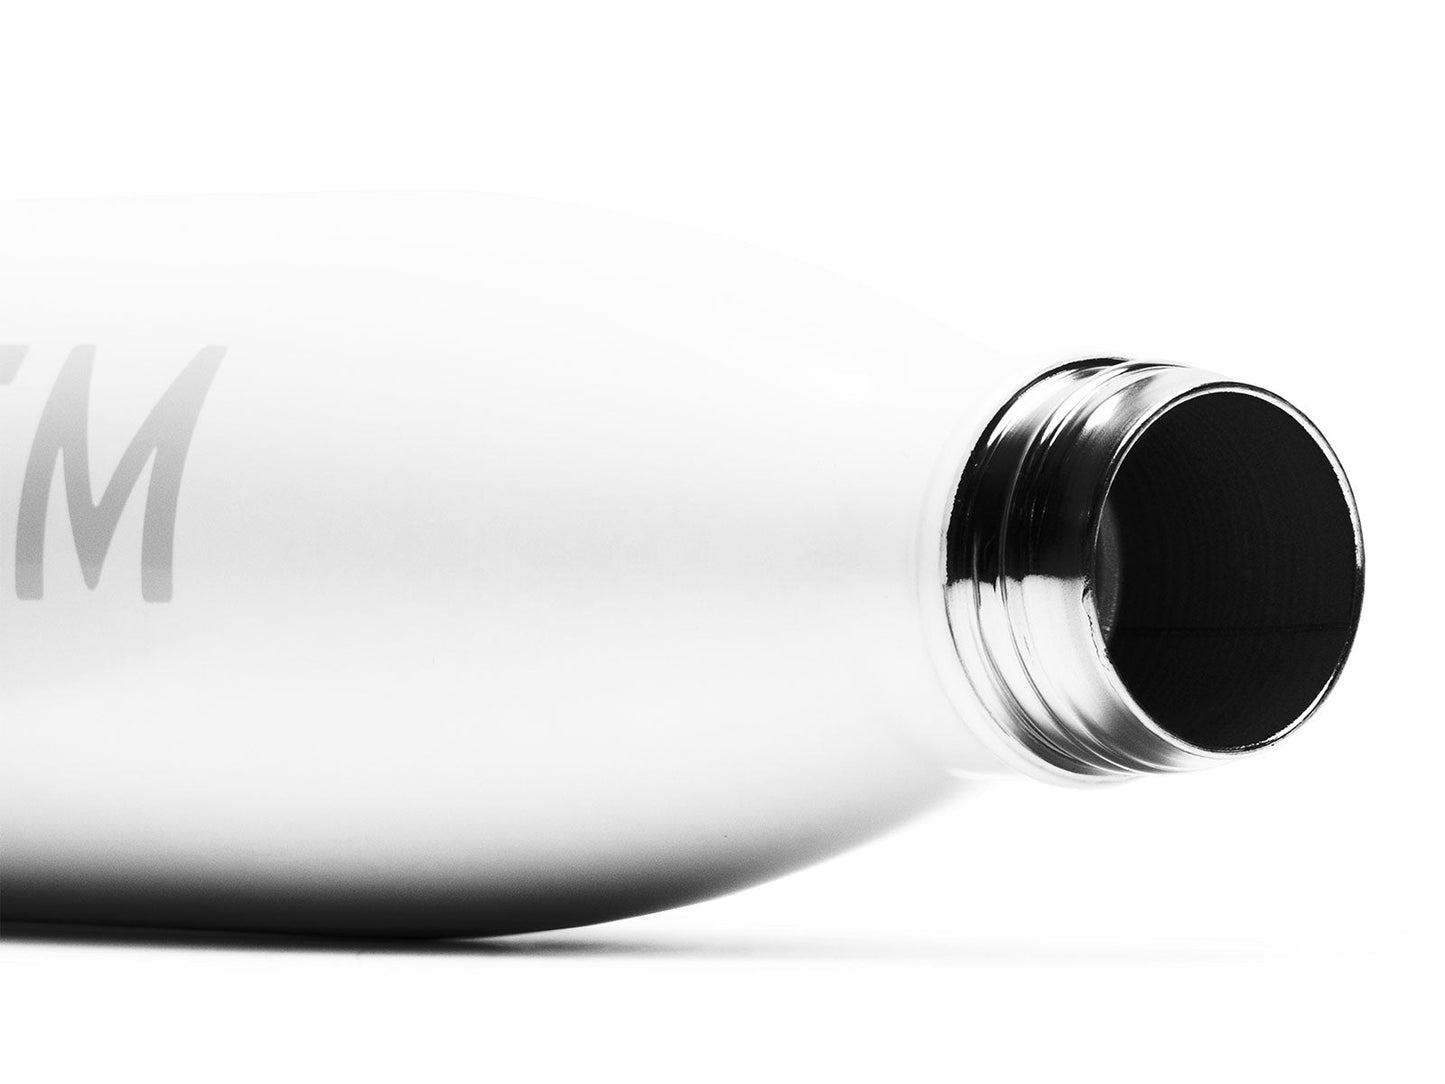 TIEM Insulated Water Bottle - White